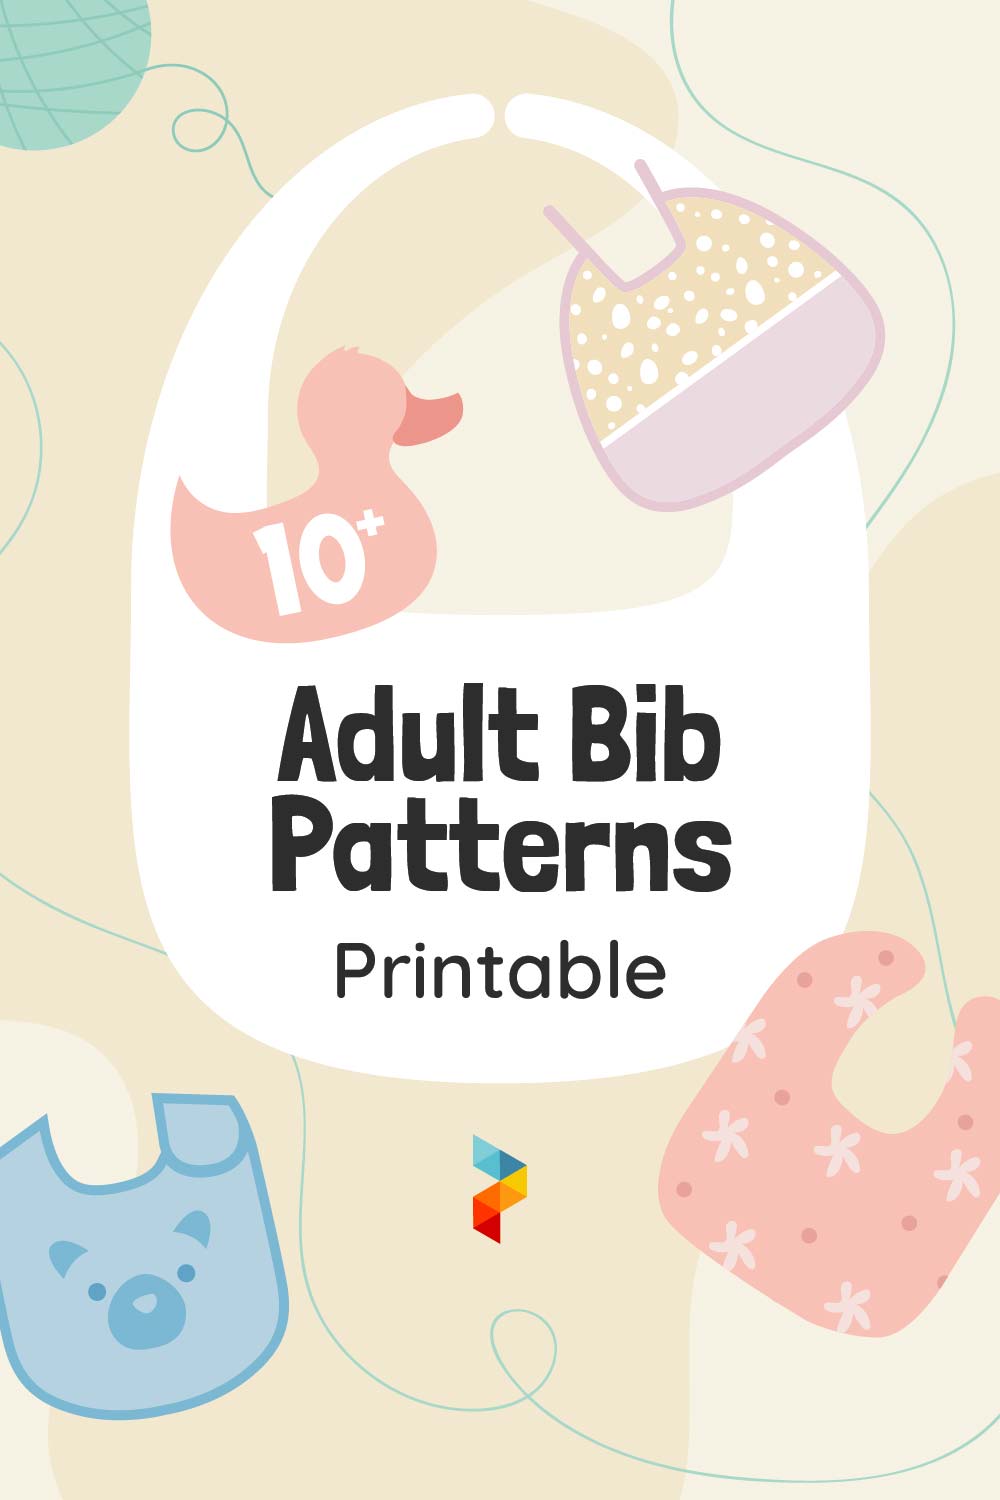 Adult Bib Patterns Printable